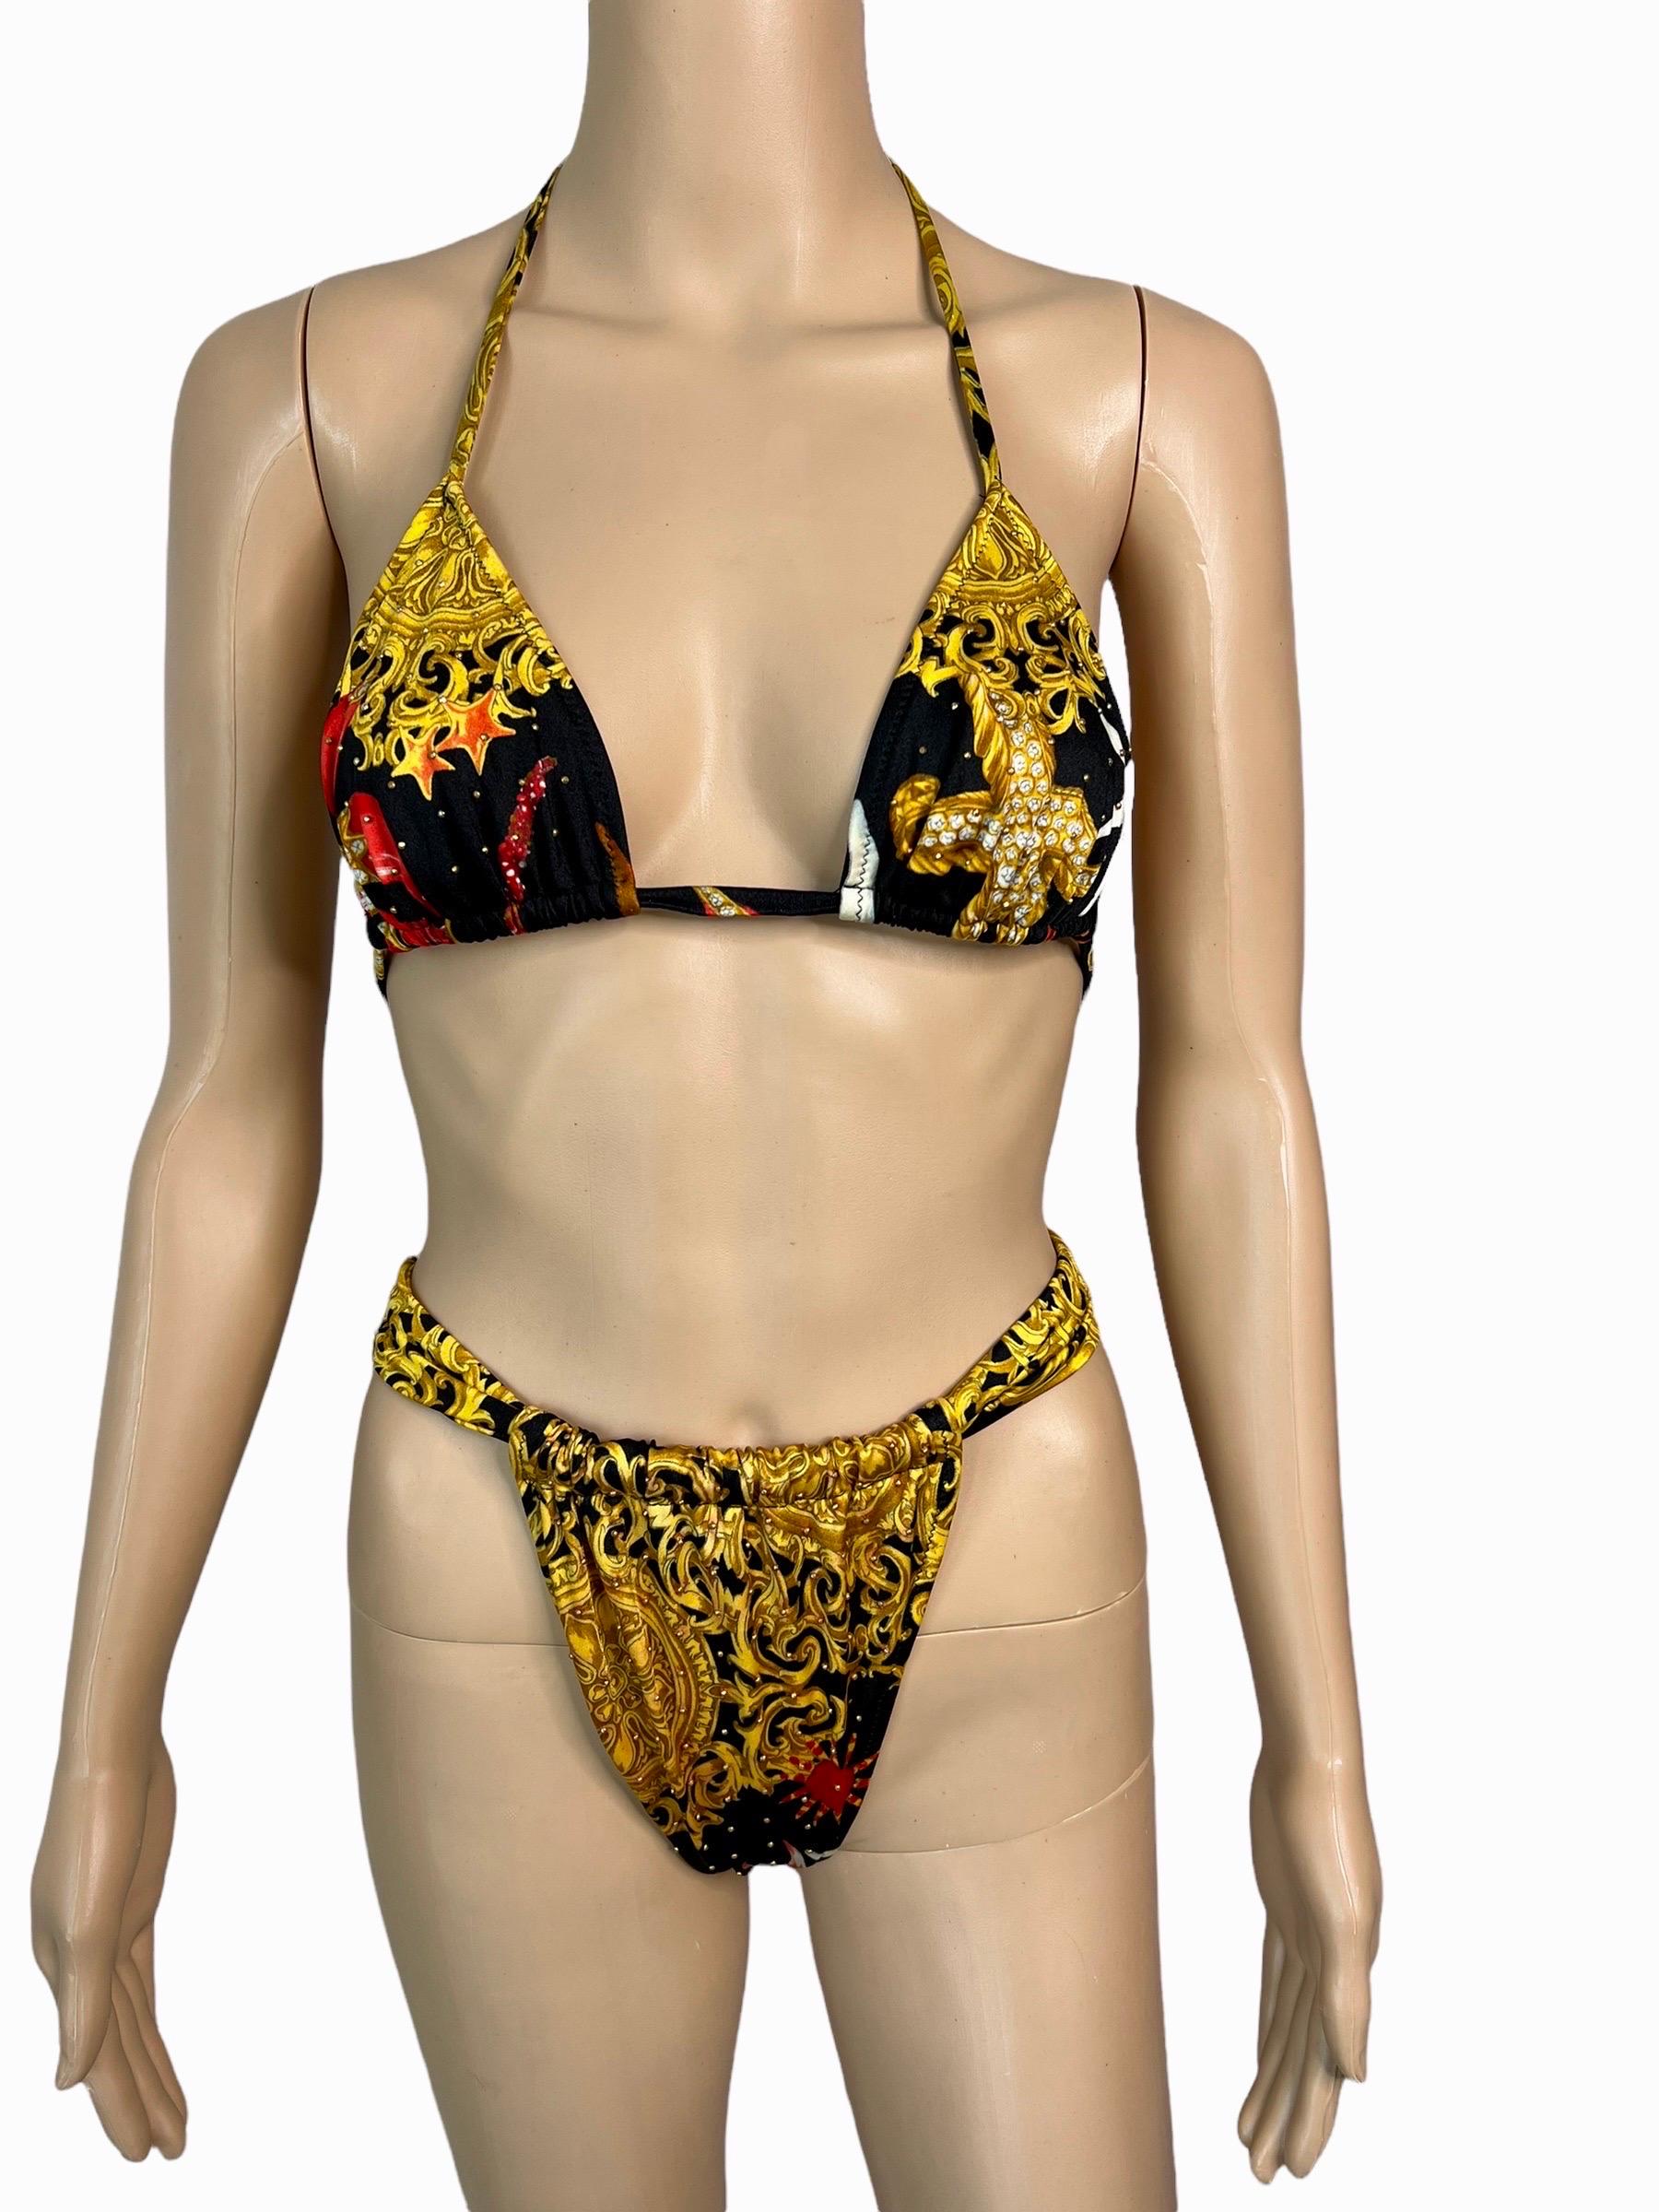 Brown Gianni Versace S/S 1992 Baroque Embellished Two-Piece Bikini Swimsuit Swimwear For Sale